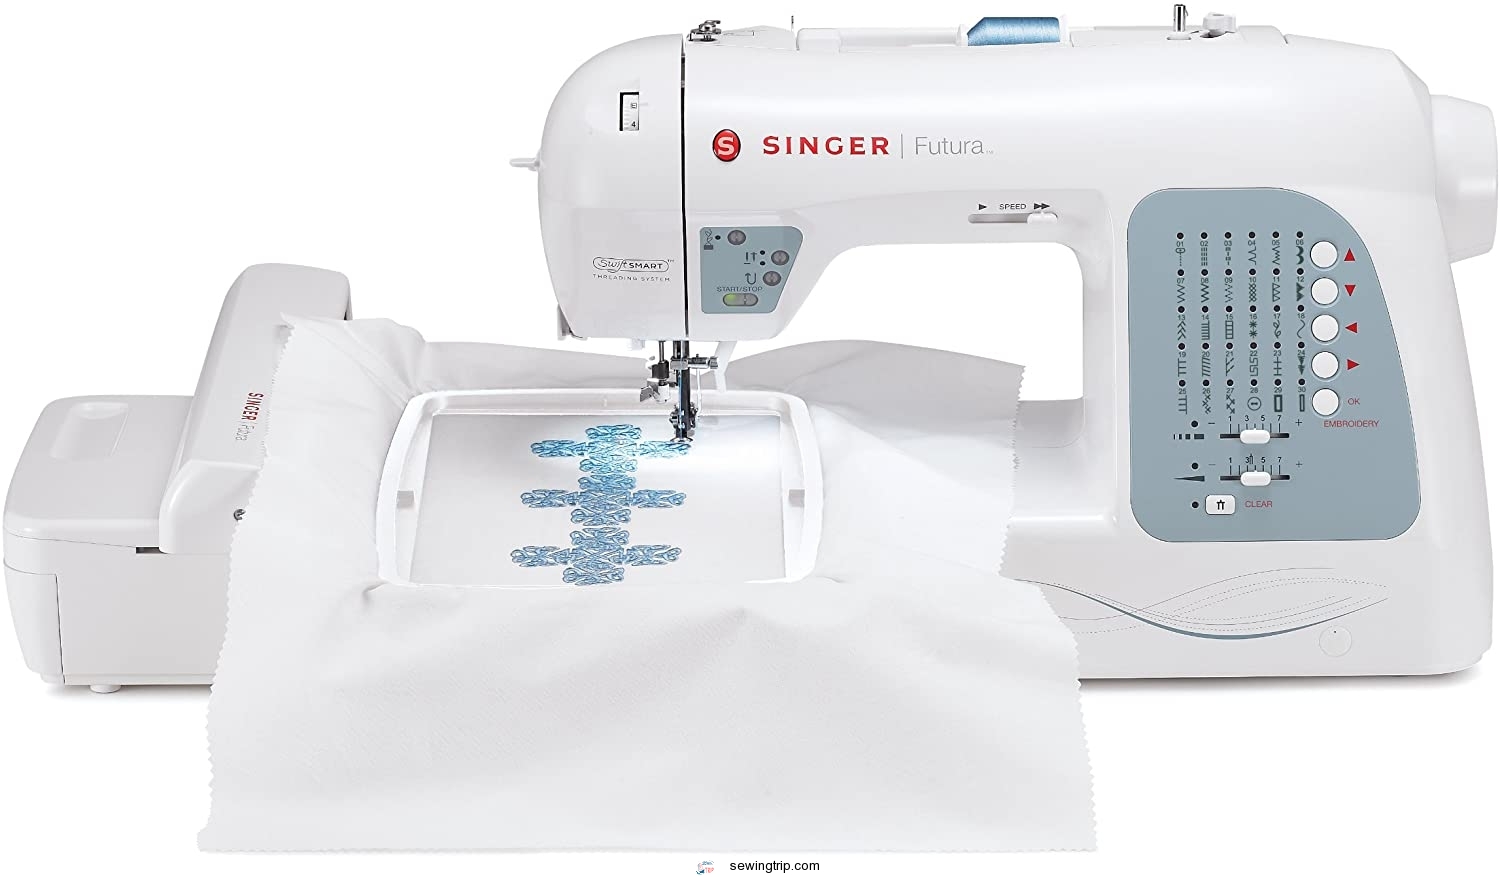 SINGER Futura XL400 Portable Sewing